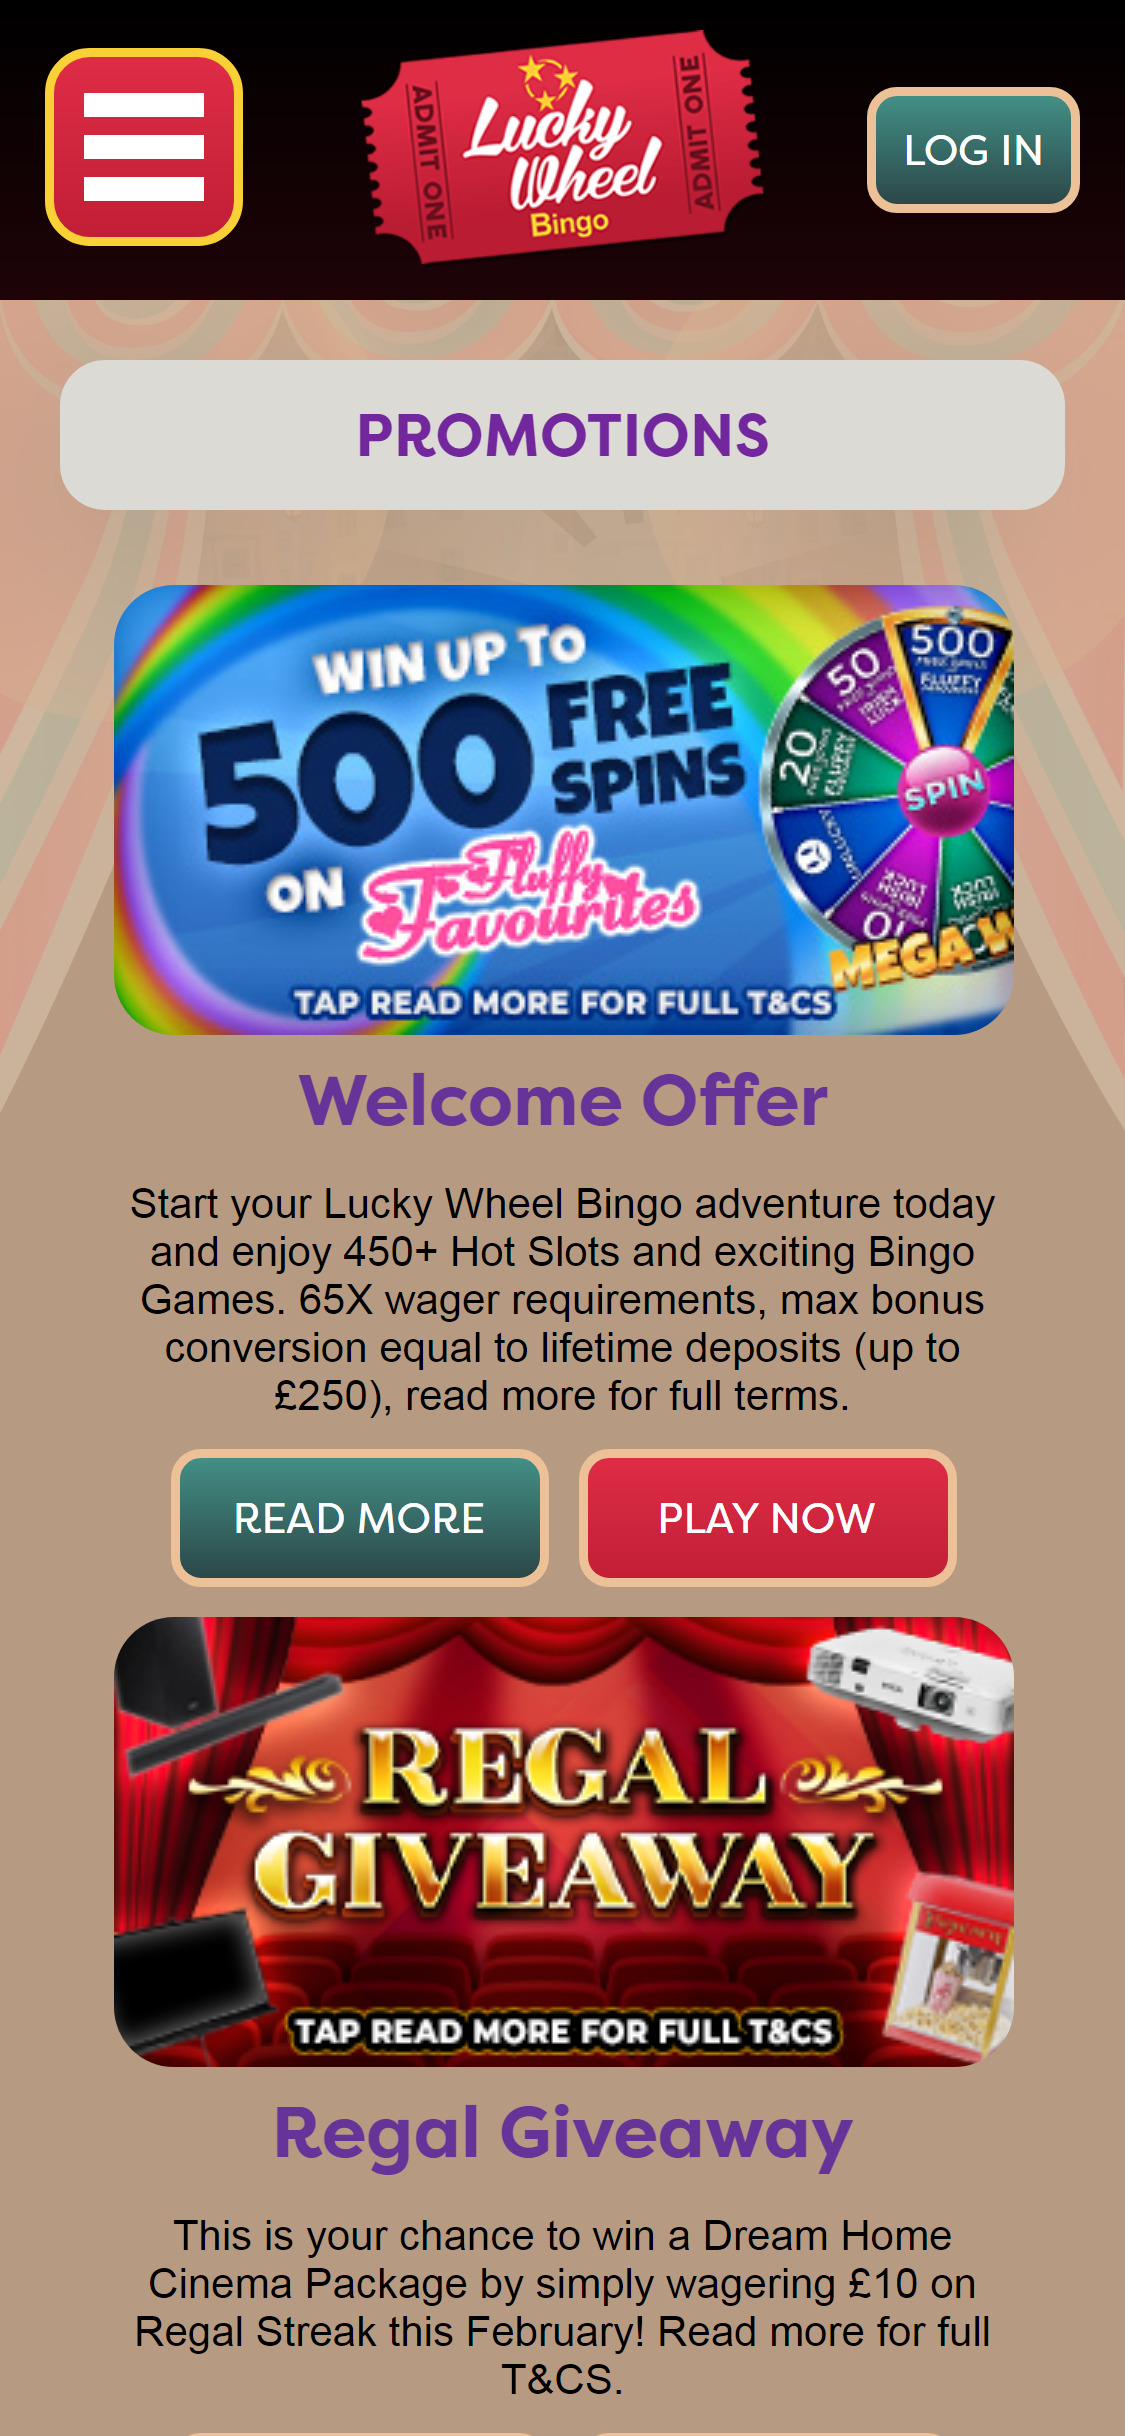 Lucky Wheel Bingo Casino Mobile No Deposit Bonus Review